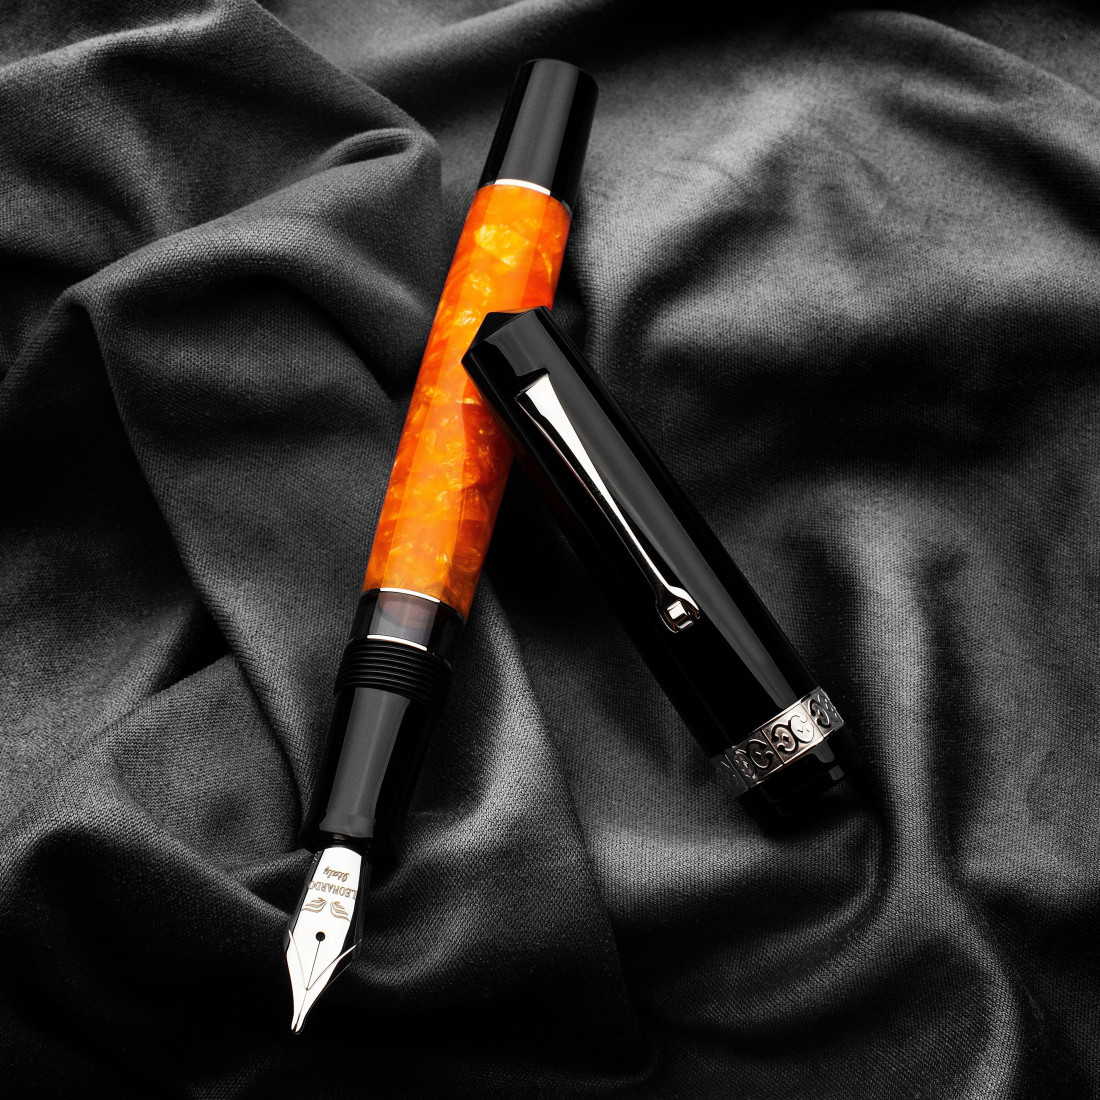 Leonardo Officina Italiana Momento Magico DNA black orange PT fountain pen